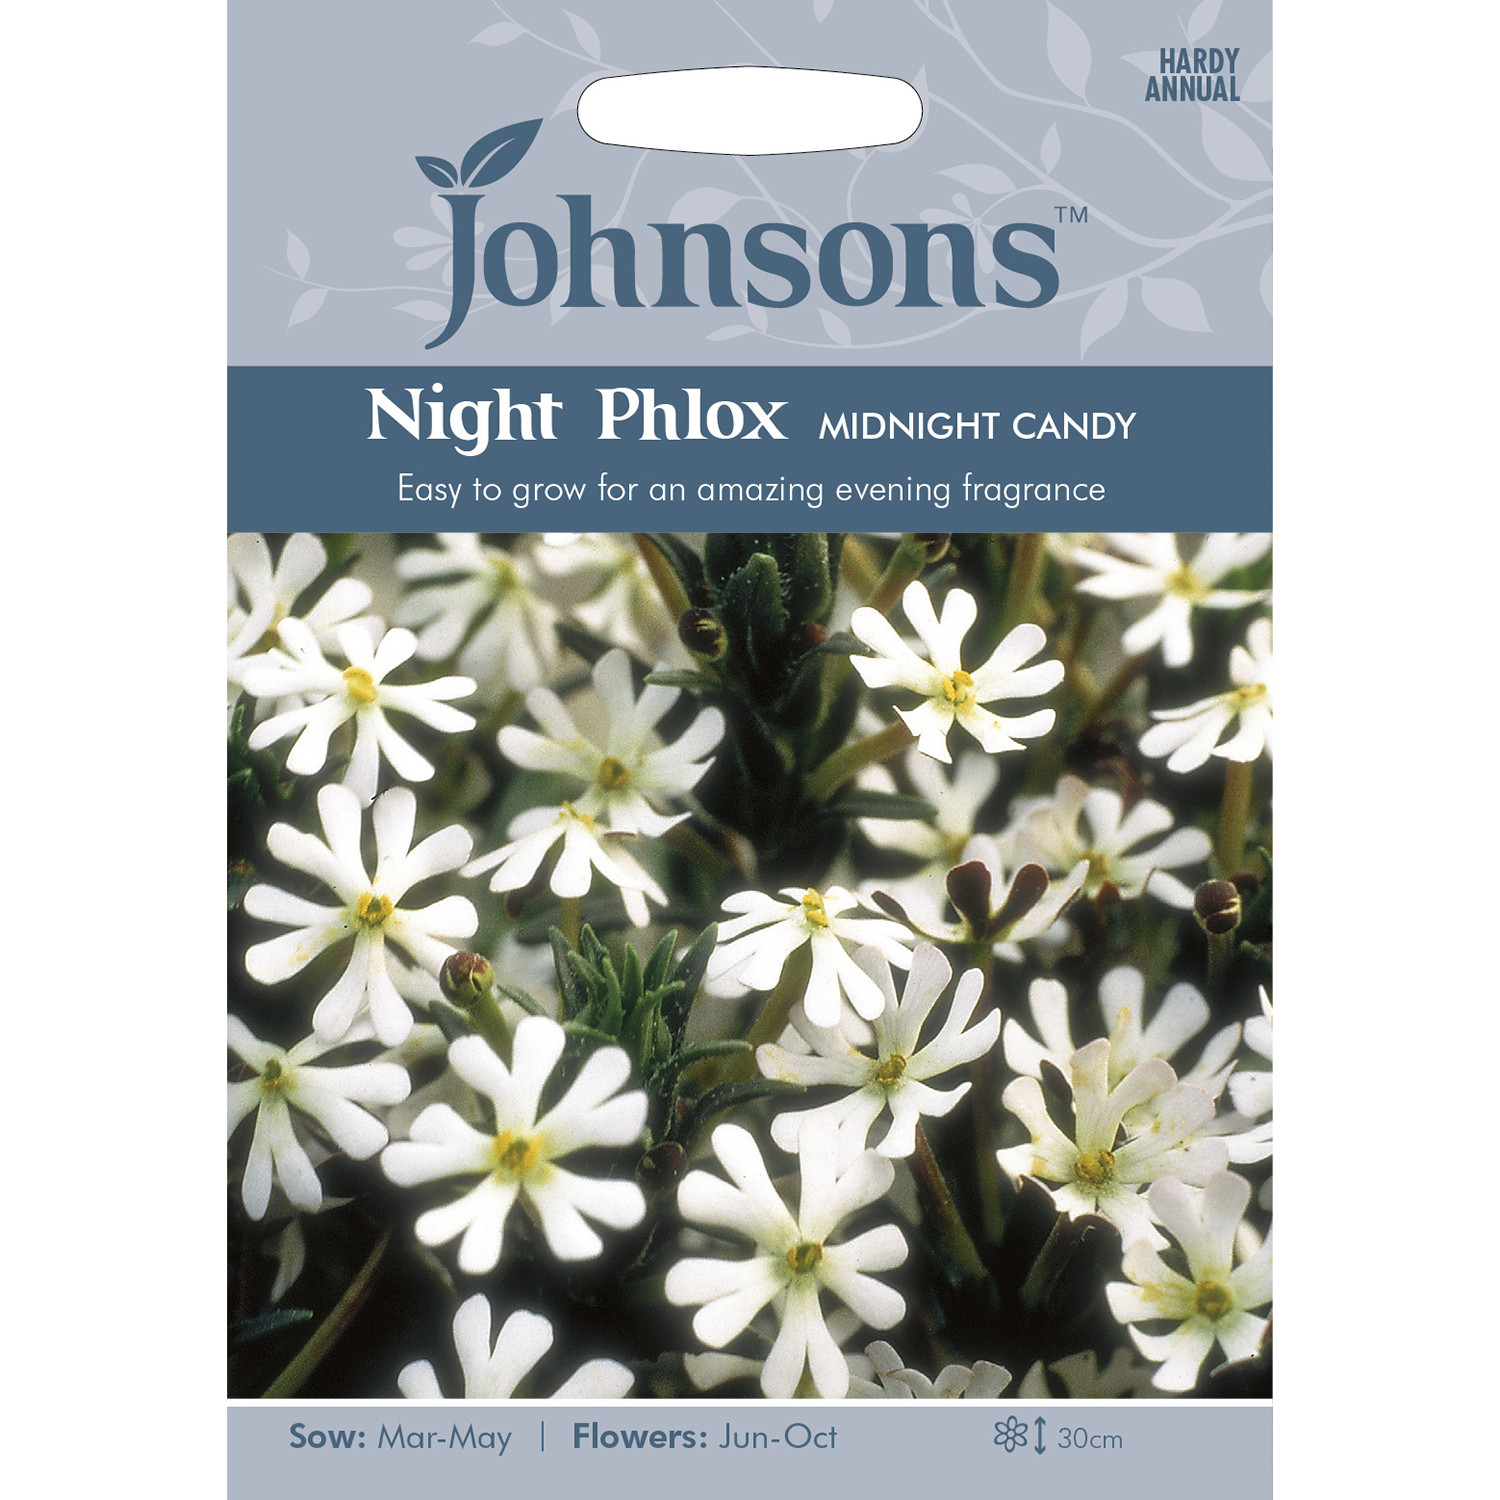 Johnsons Night Phlox Midnight Candy Flower Seeds Image 2